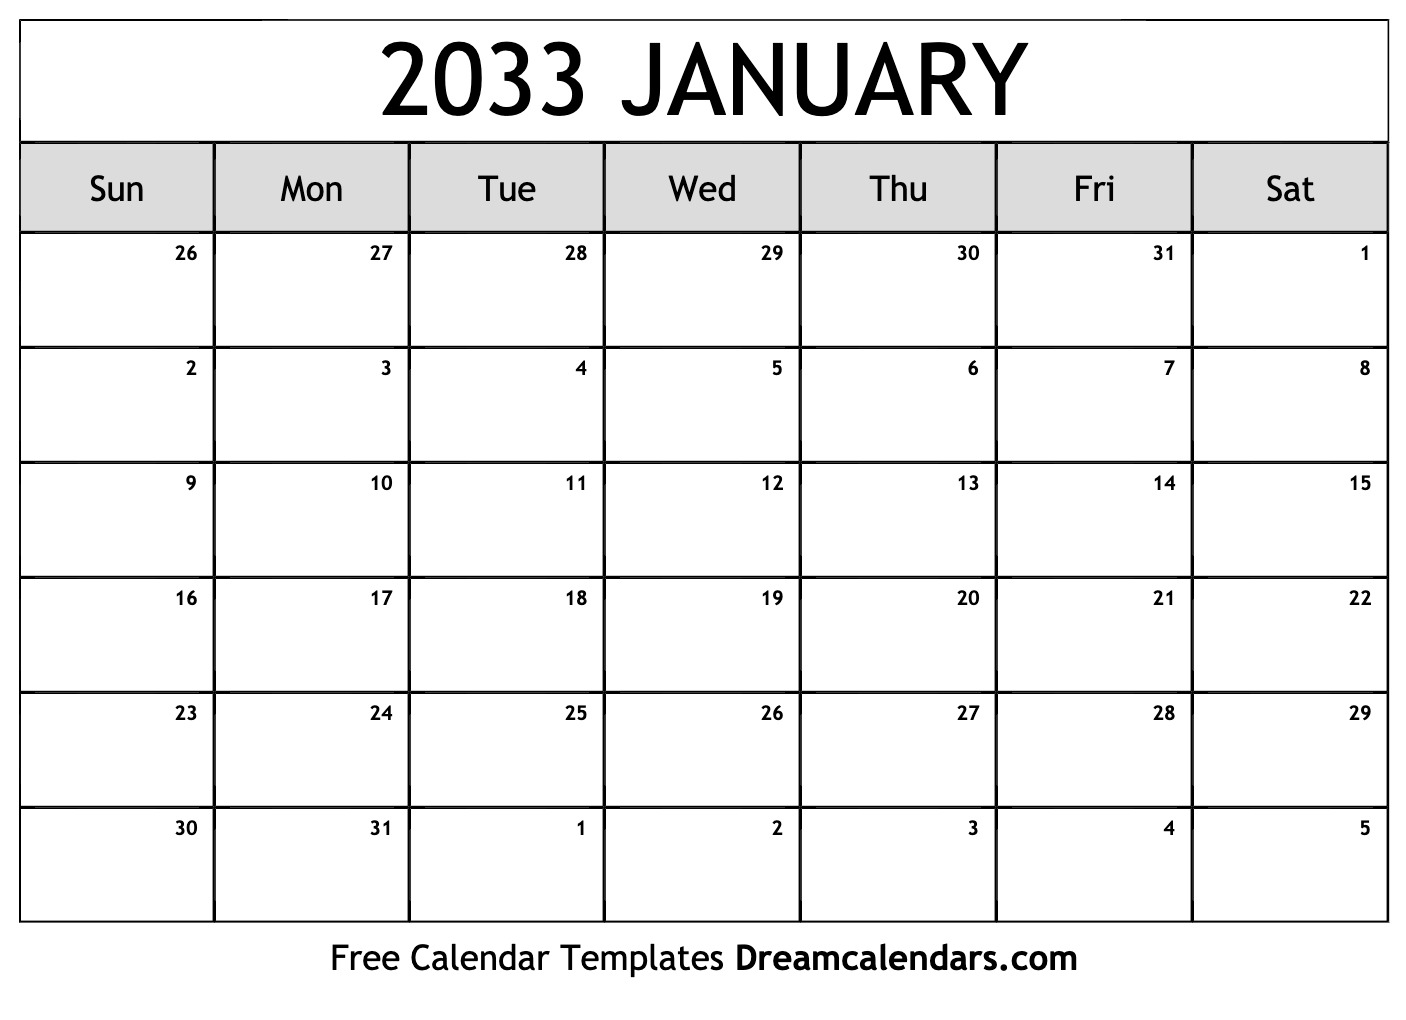 download-printable-january-2033-calendars